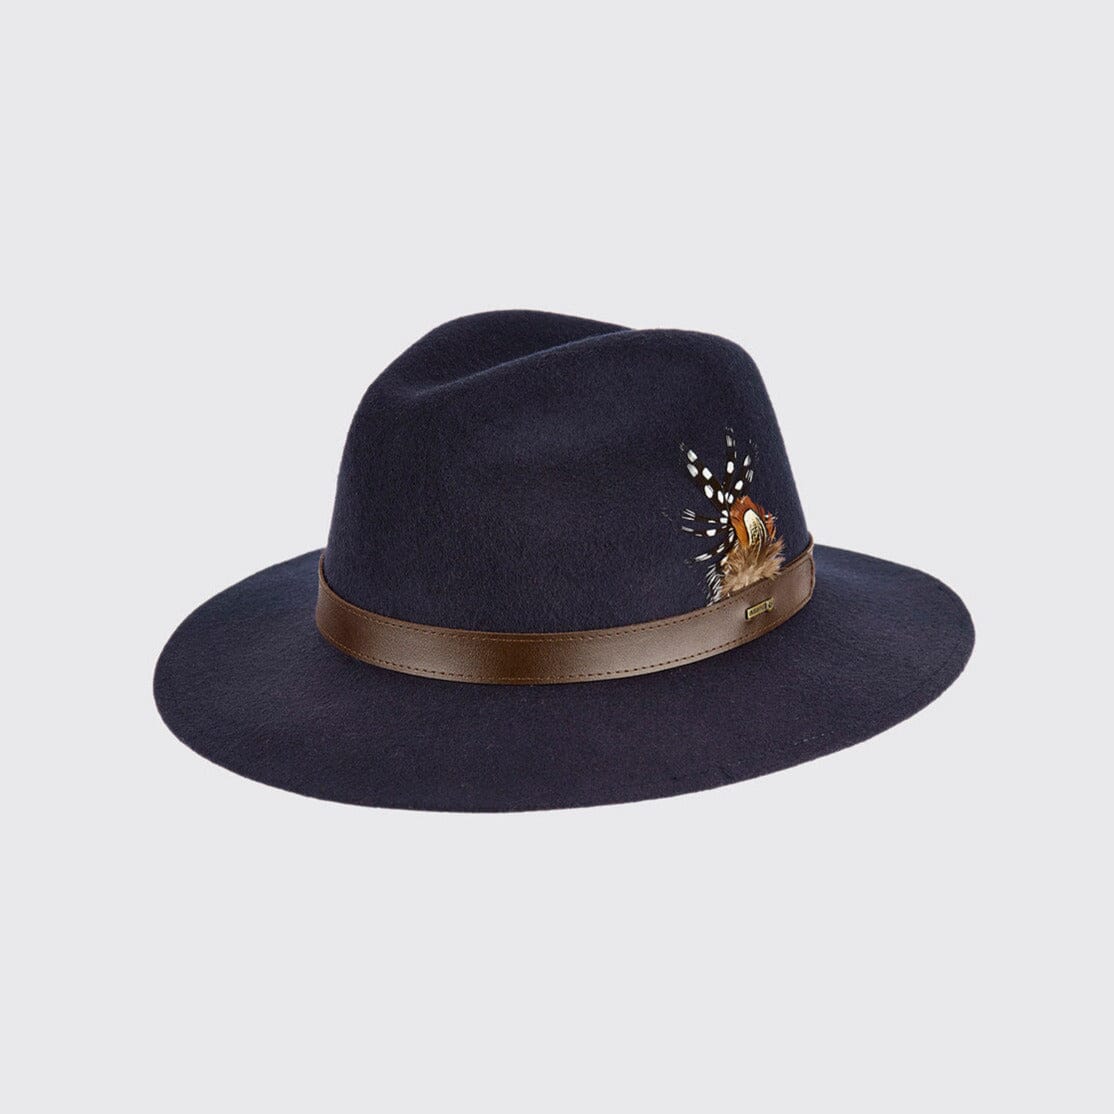 Gallagher filt hat m. fjer, marineblå - 55 (small)